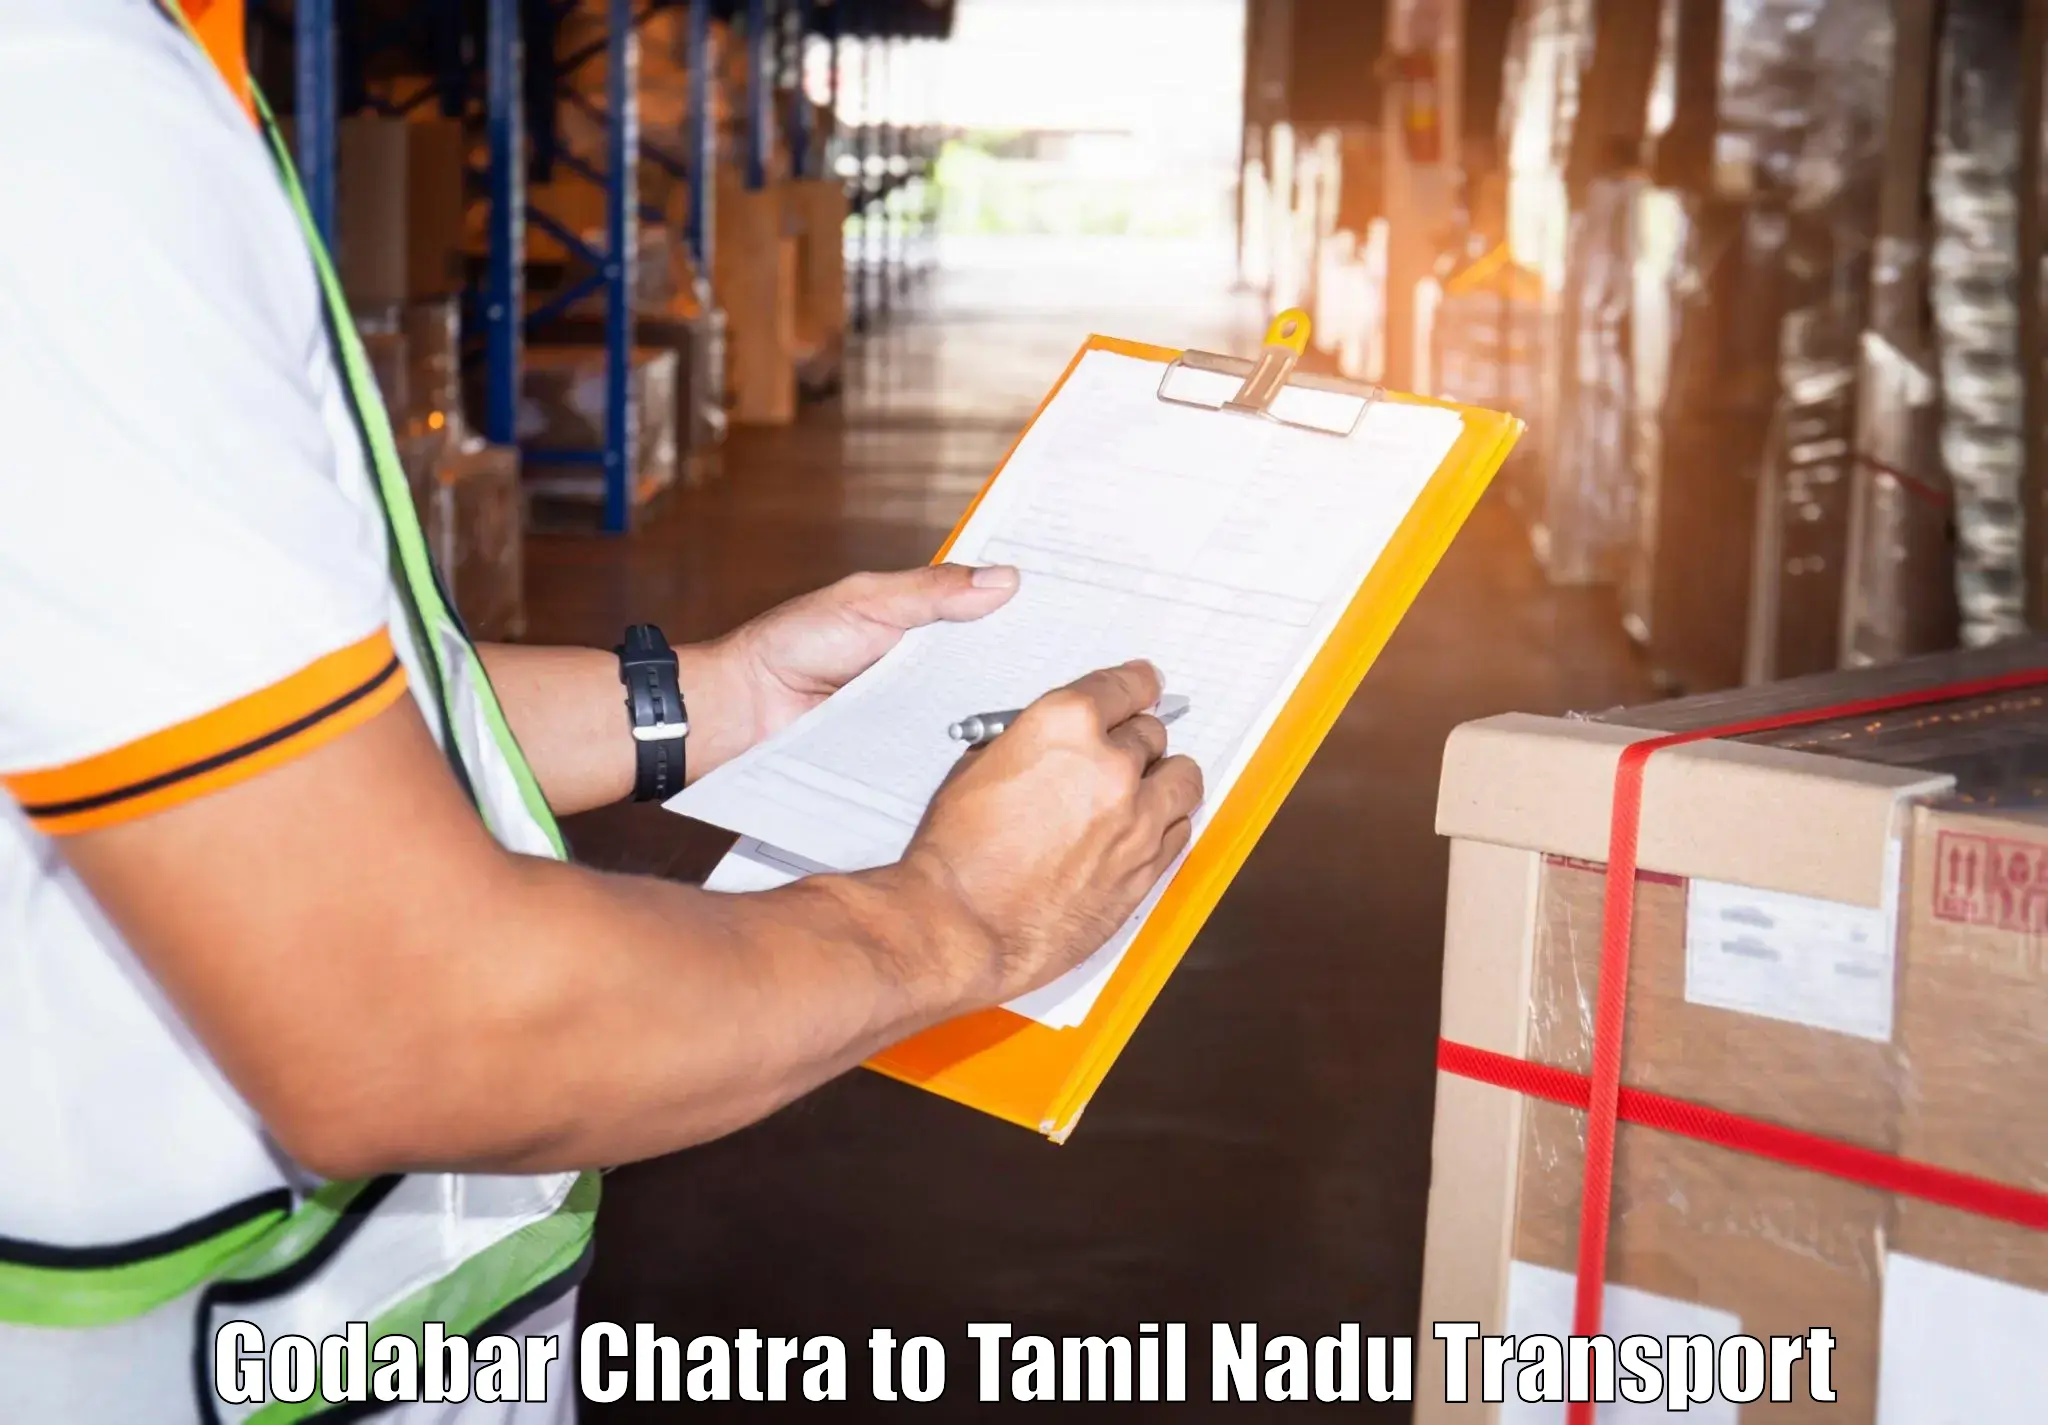 Shipping partner Godabar Chatra to The Gandhigram Rural Institute